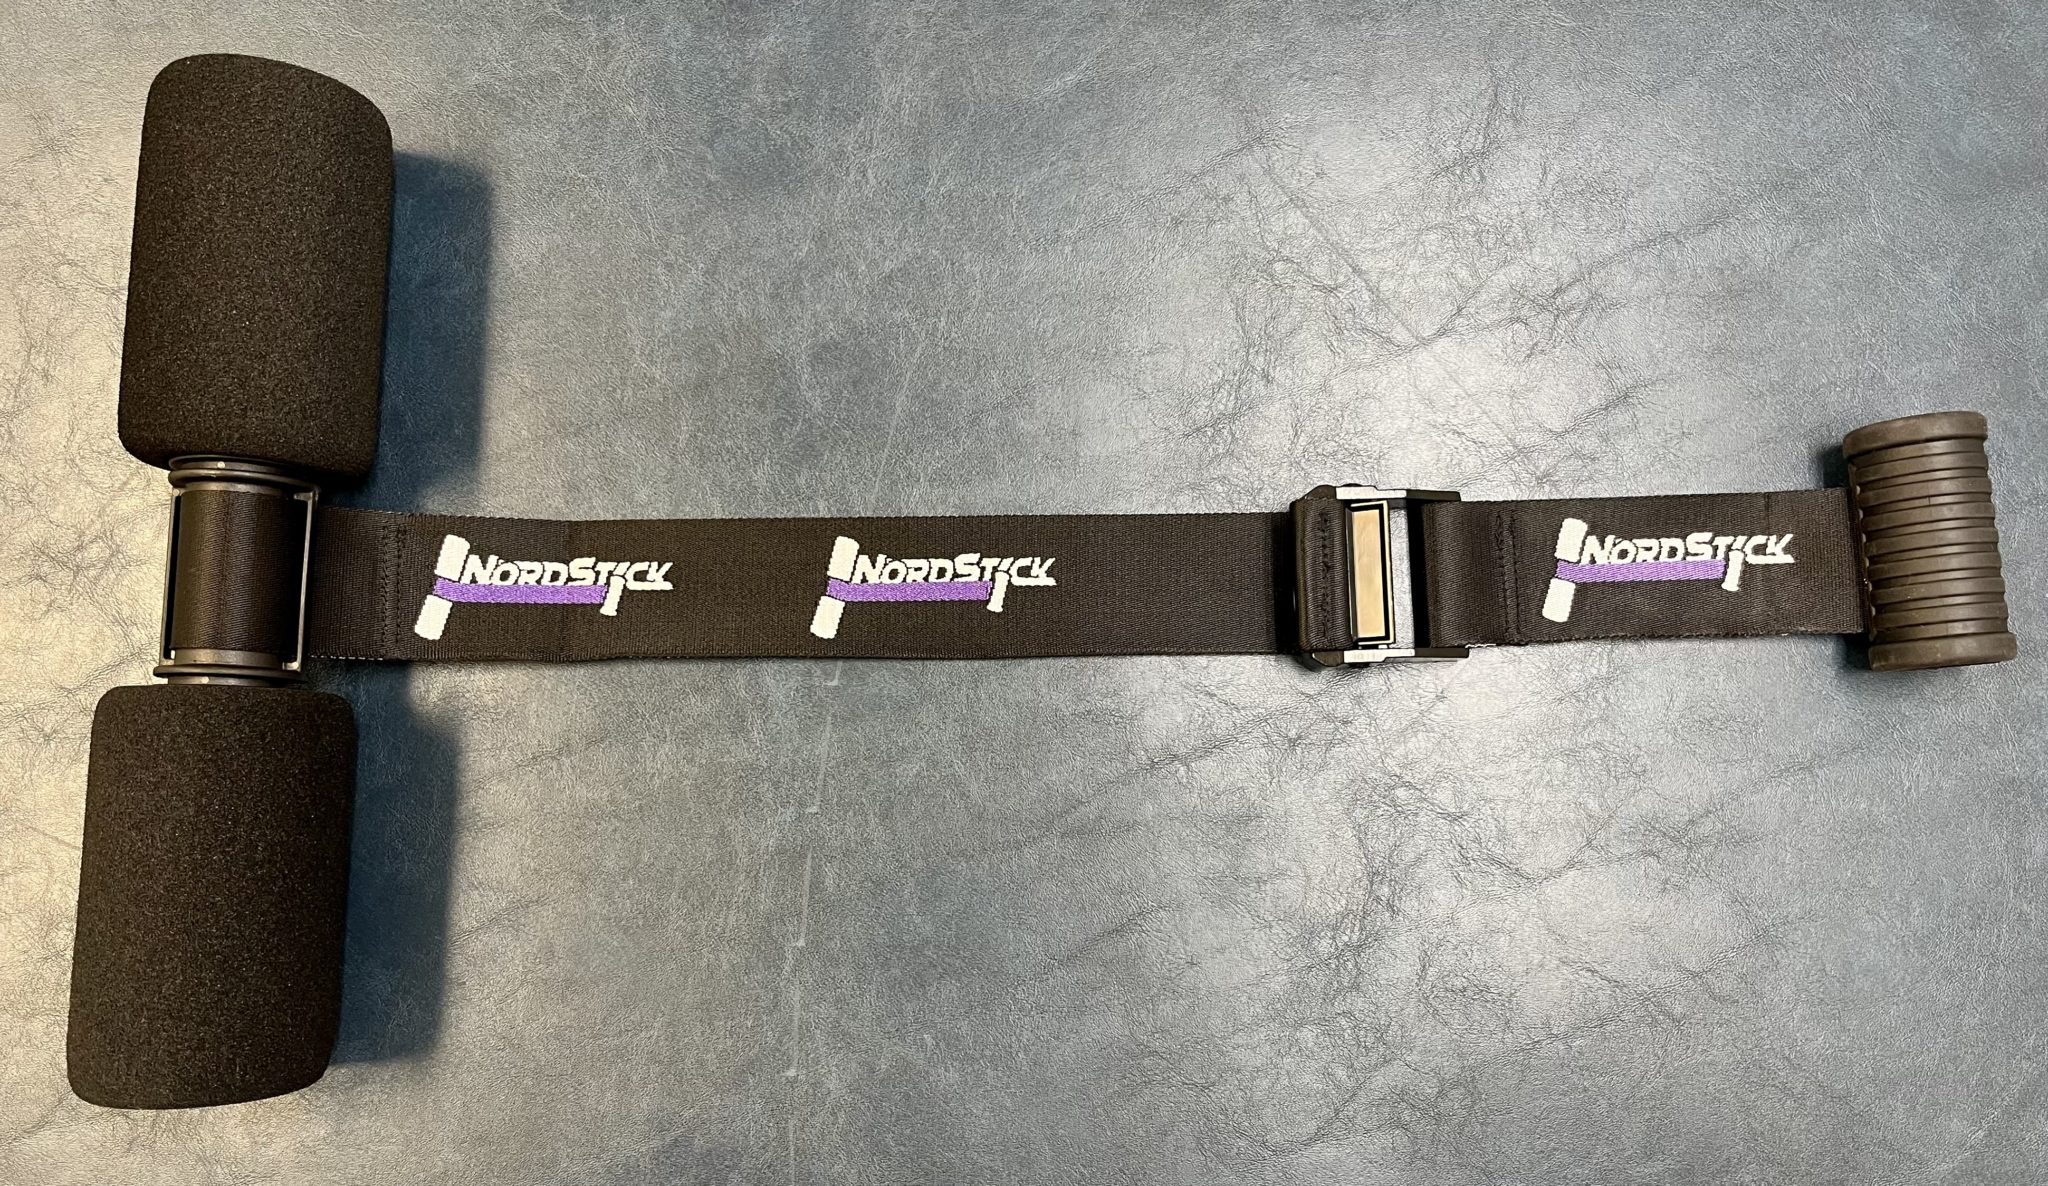 NordStick Nordic Hamstring Curl Strap - Original Nord Stick Exercise Set  for Home and Travel - 5 Second Set Up